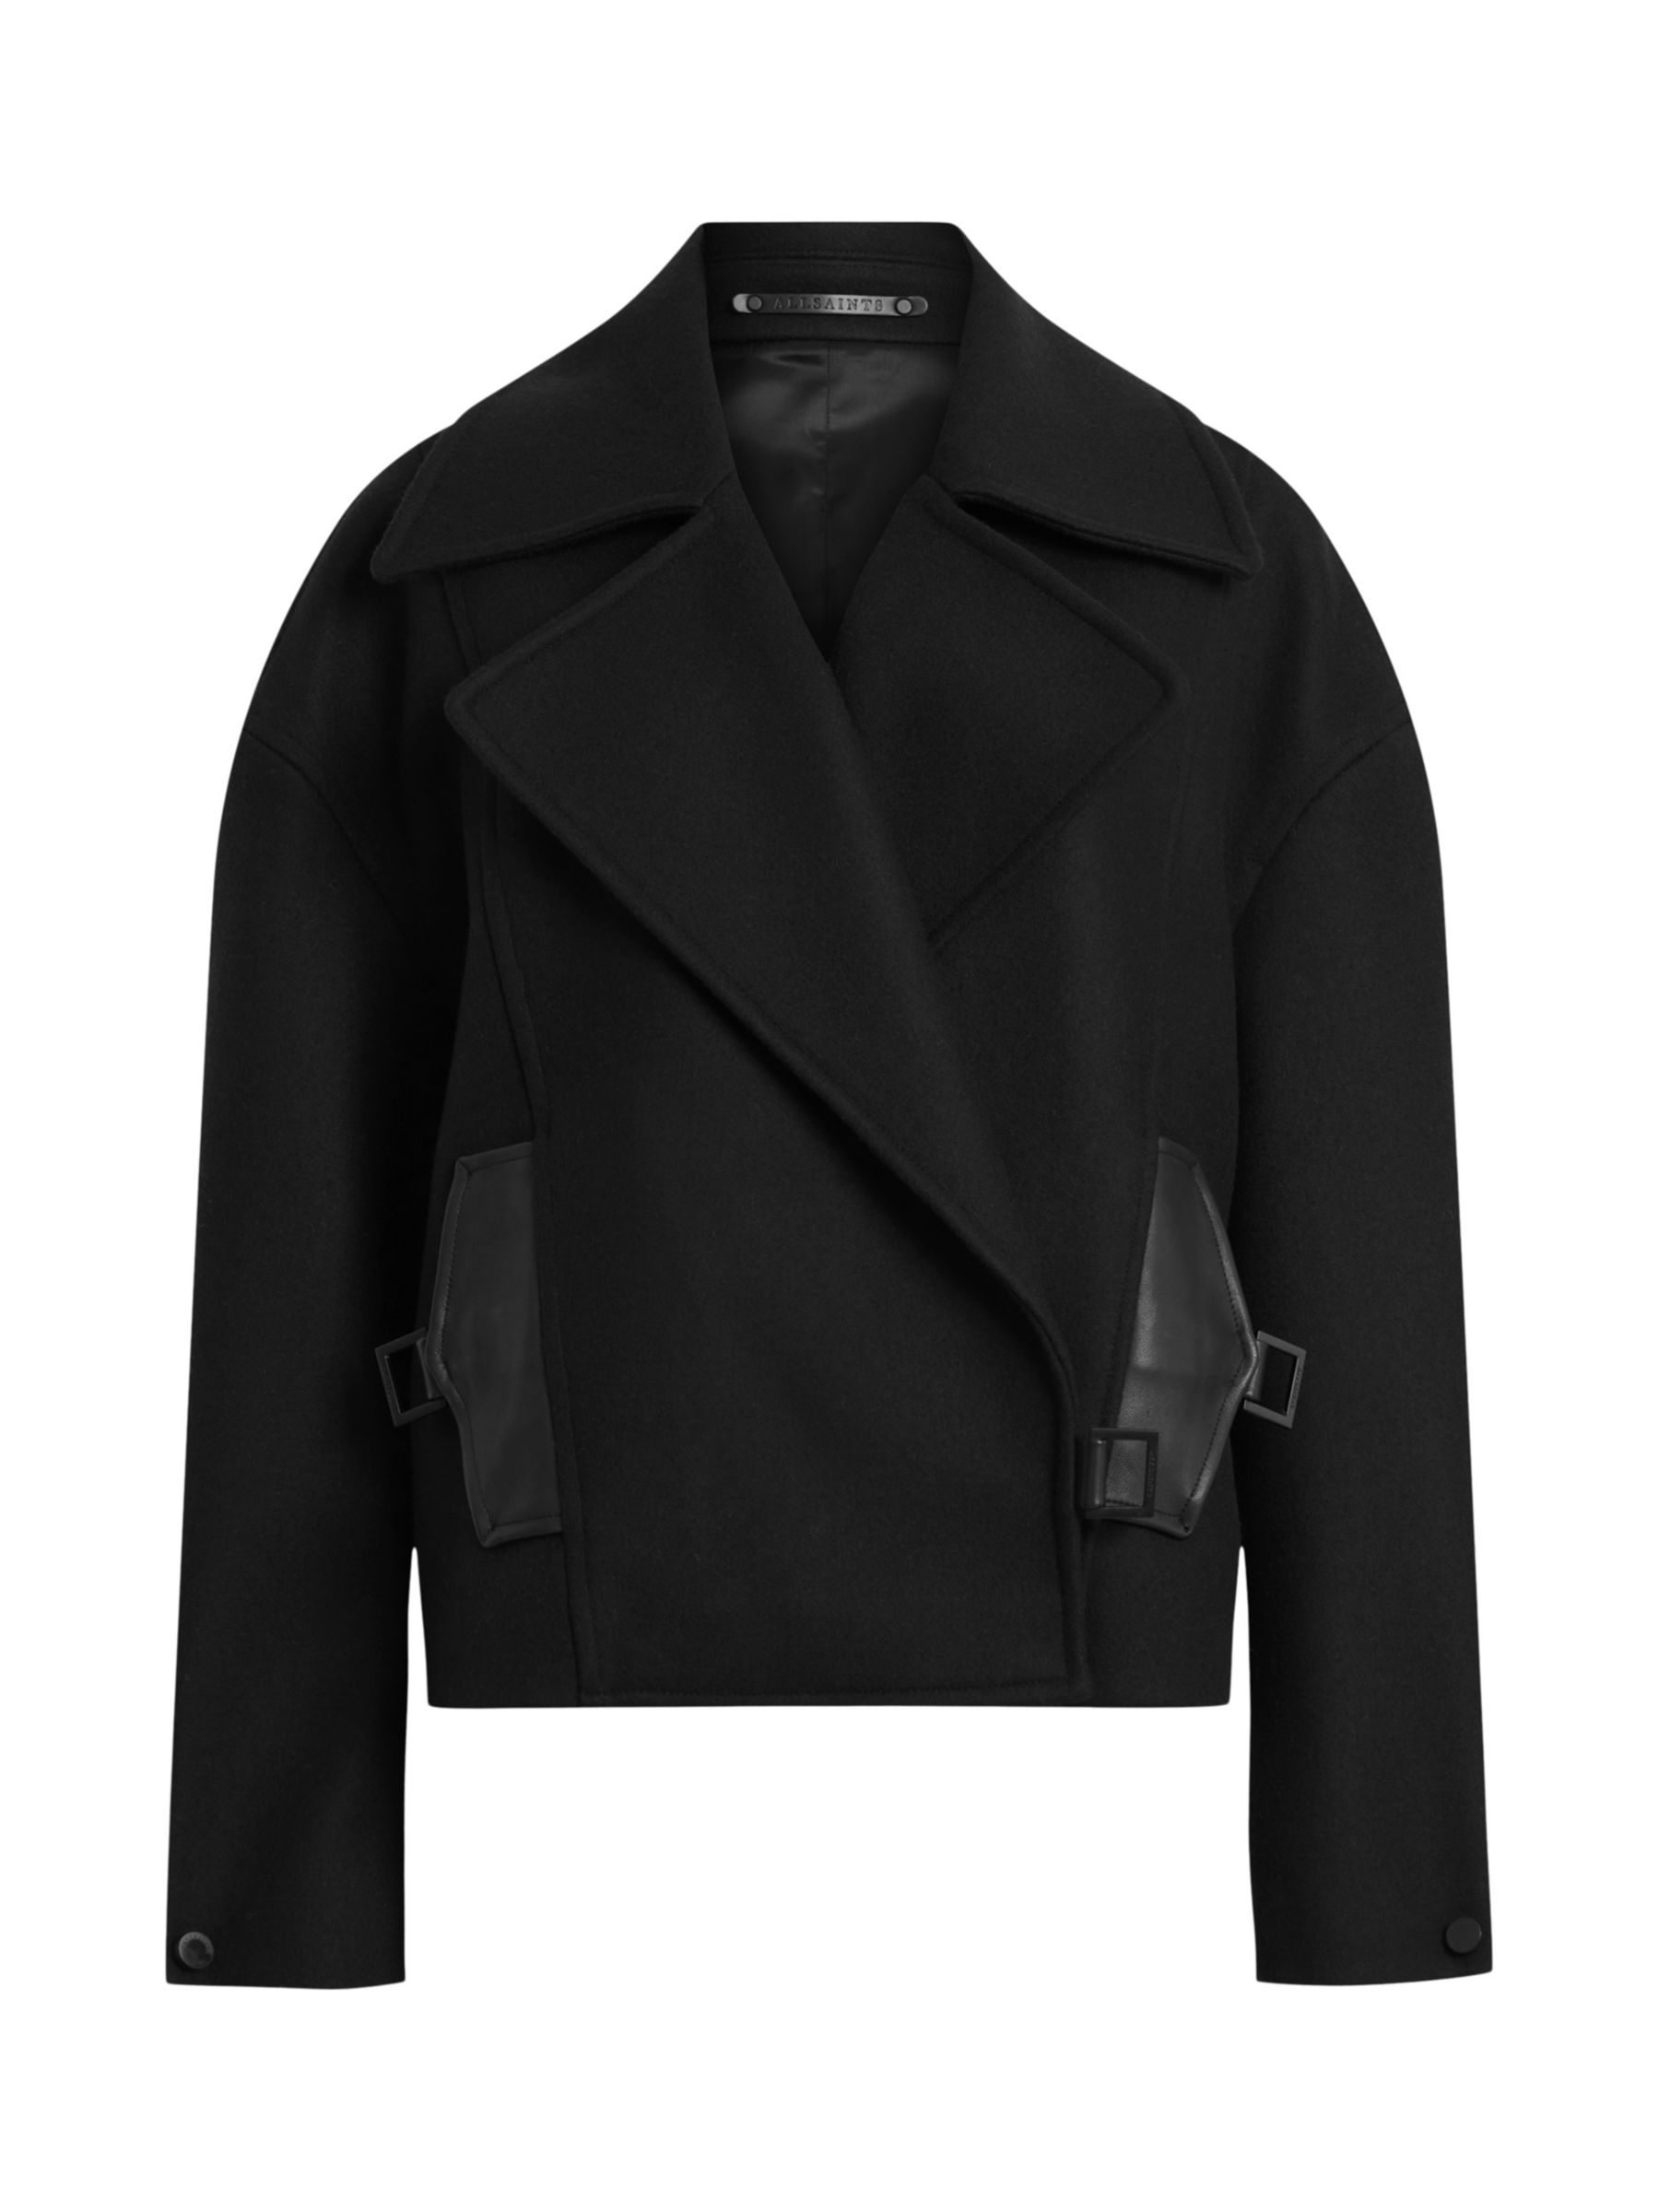 AllSaints Cooper Jacket, Black at John Lewis & Partners